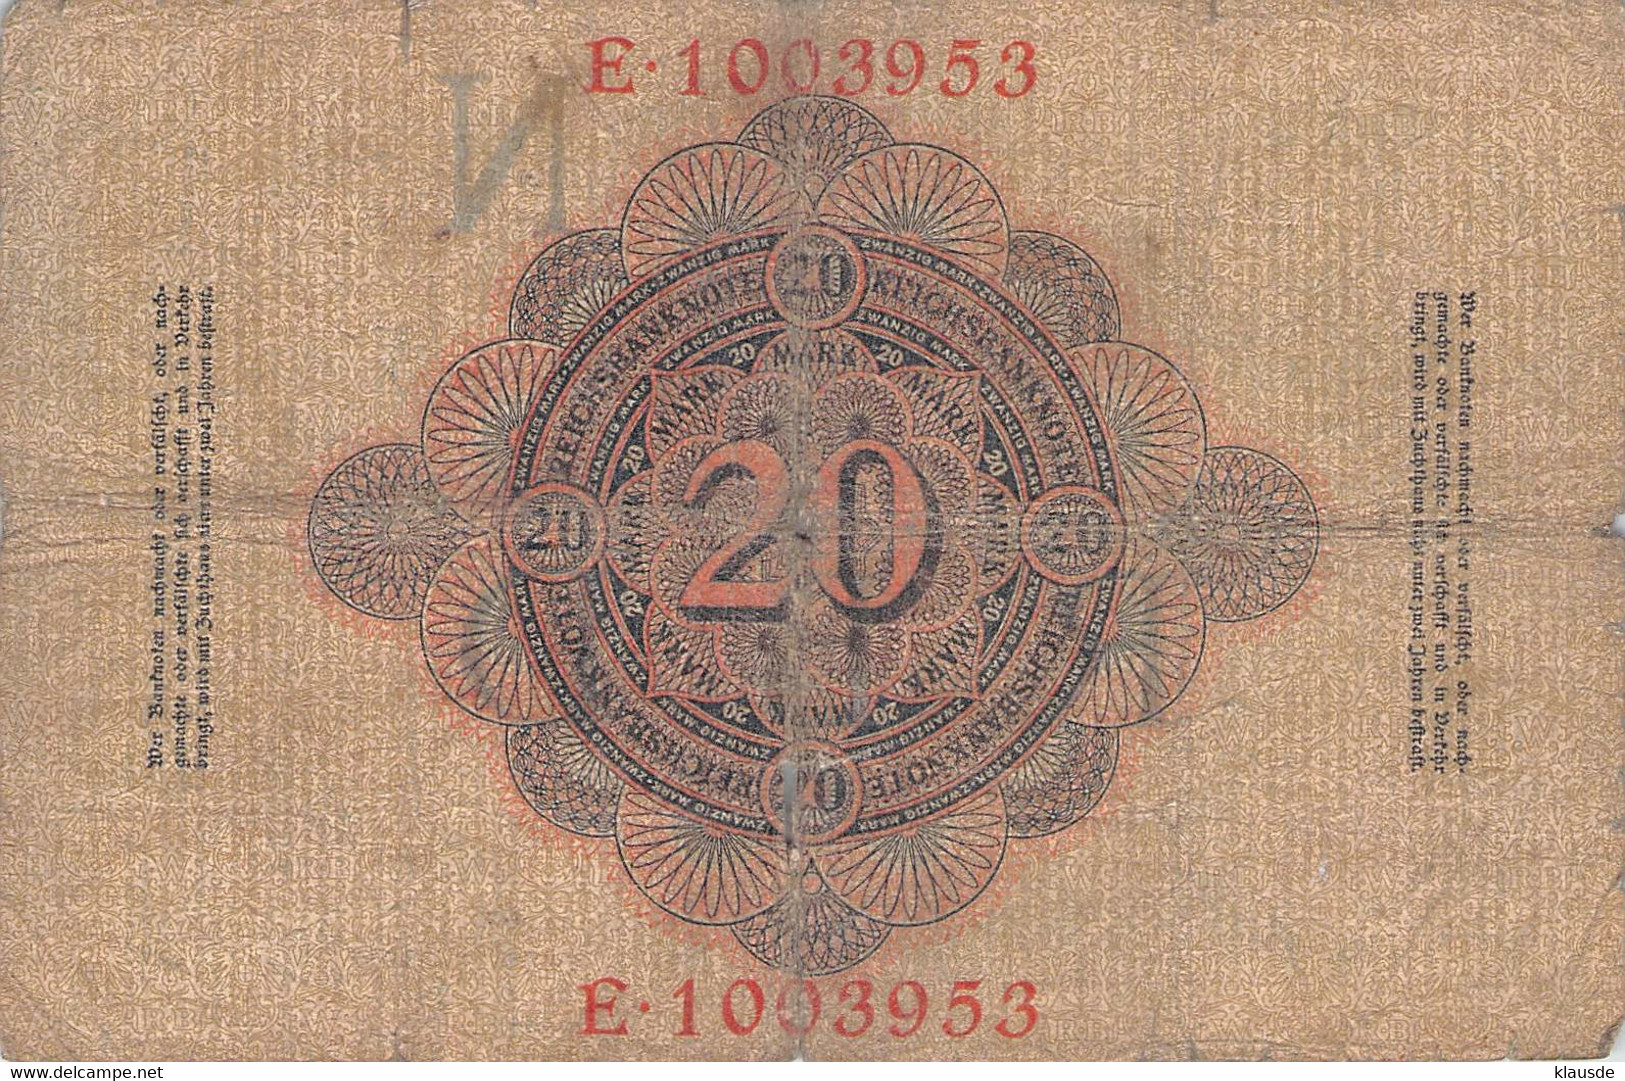 20 Mark Reichsbanknote 21.April 1914 VG/G (IV) - 20 Mark